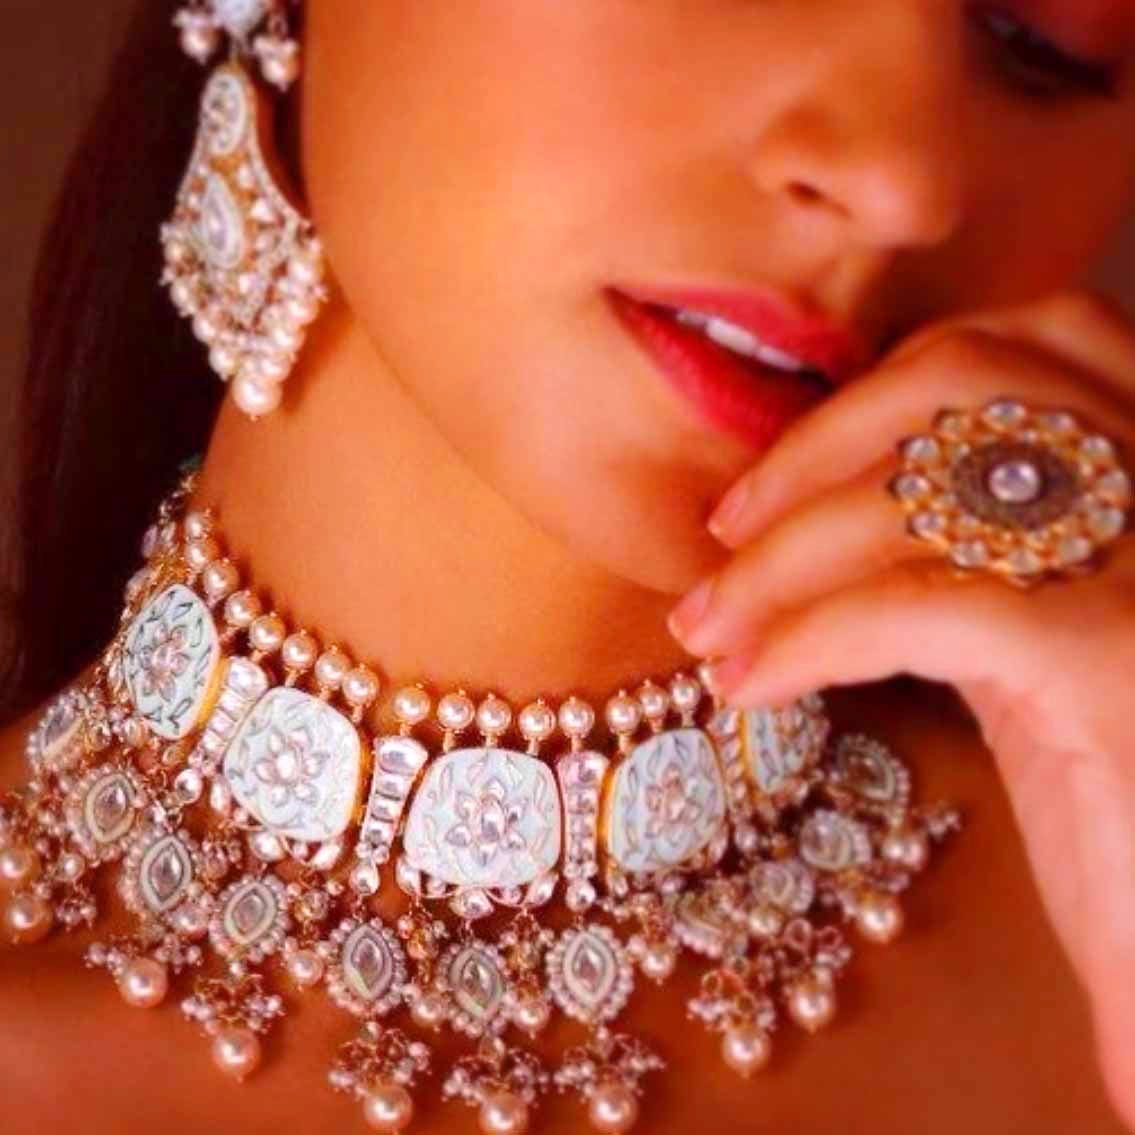 Jewellery,Fashion accessory,Diamond,Necklace,Lip,Ear,Neck,Body jewelry,Peach,Bride